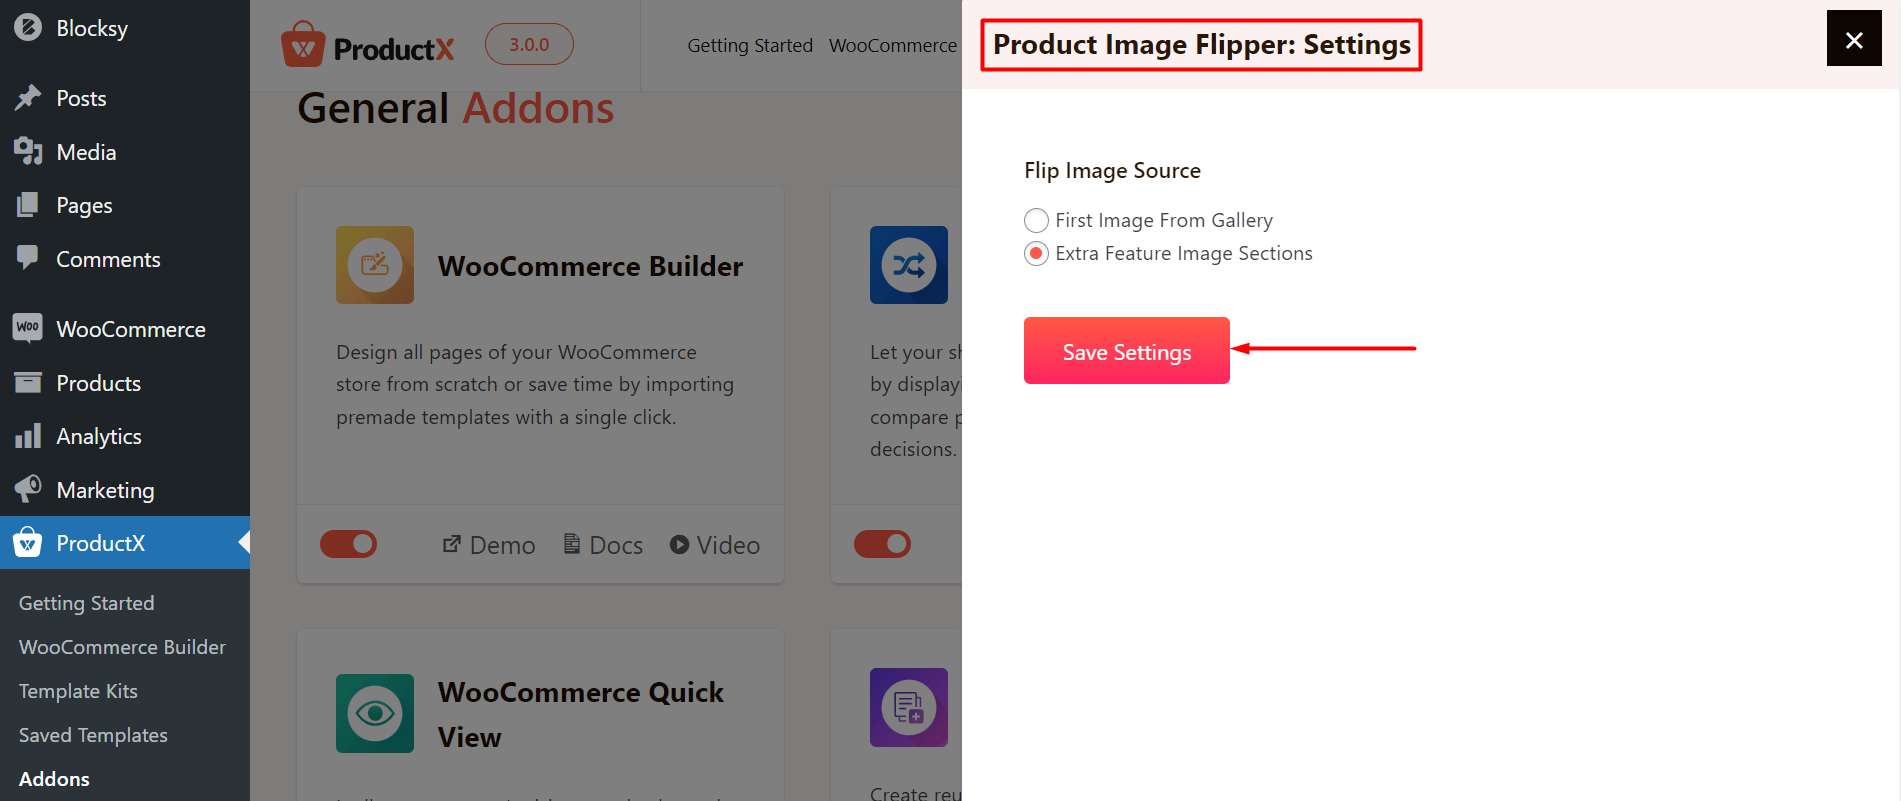 ProductX Image Flipper Settings